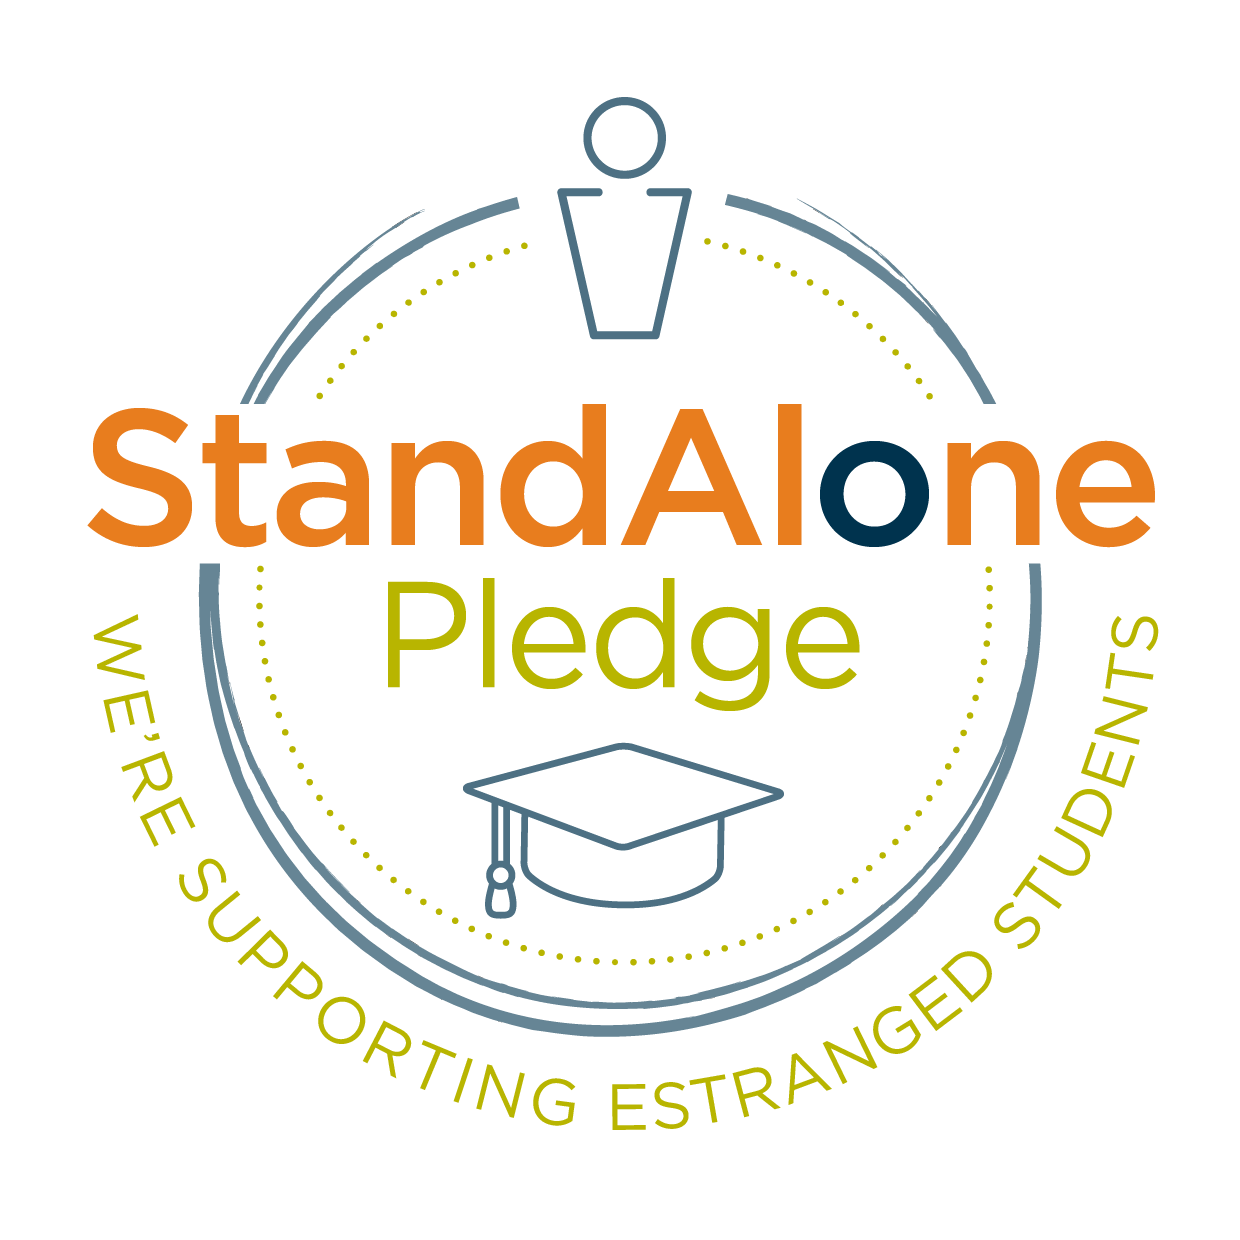 Pledge Logo - The Stand Alone Pledge estranged students to overcome